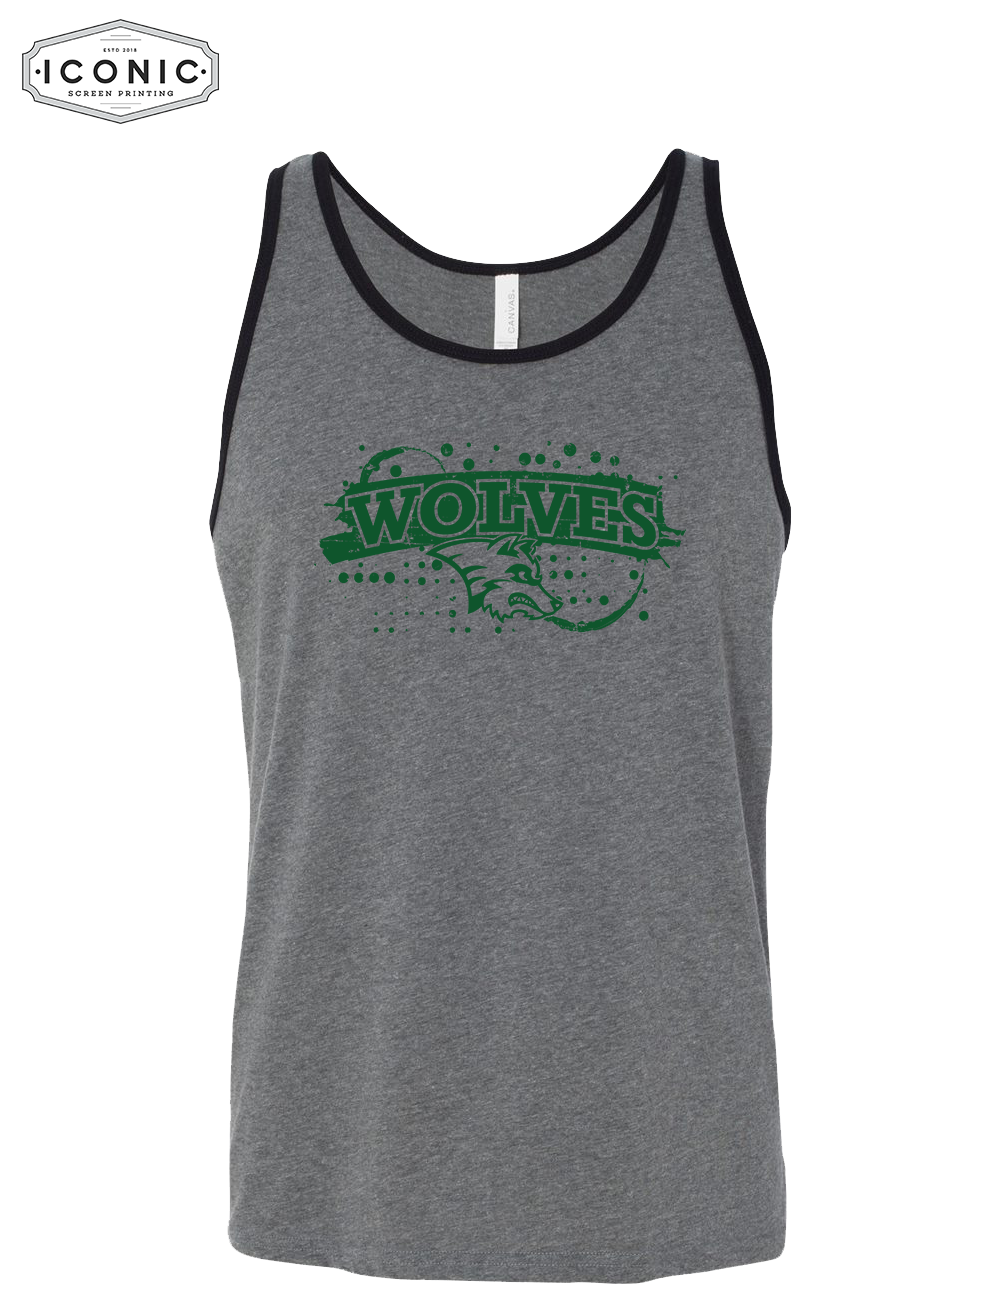 Wolves - Unisex Jersey Tank